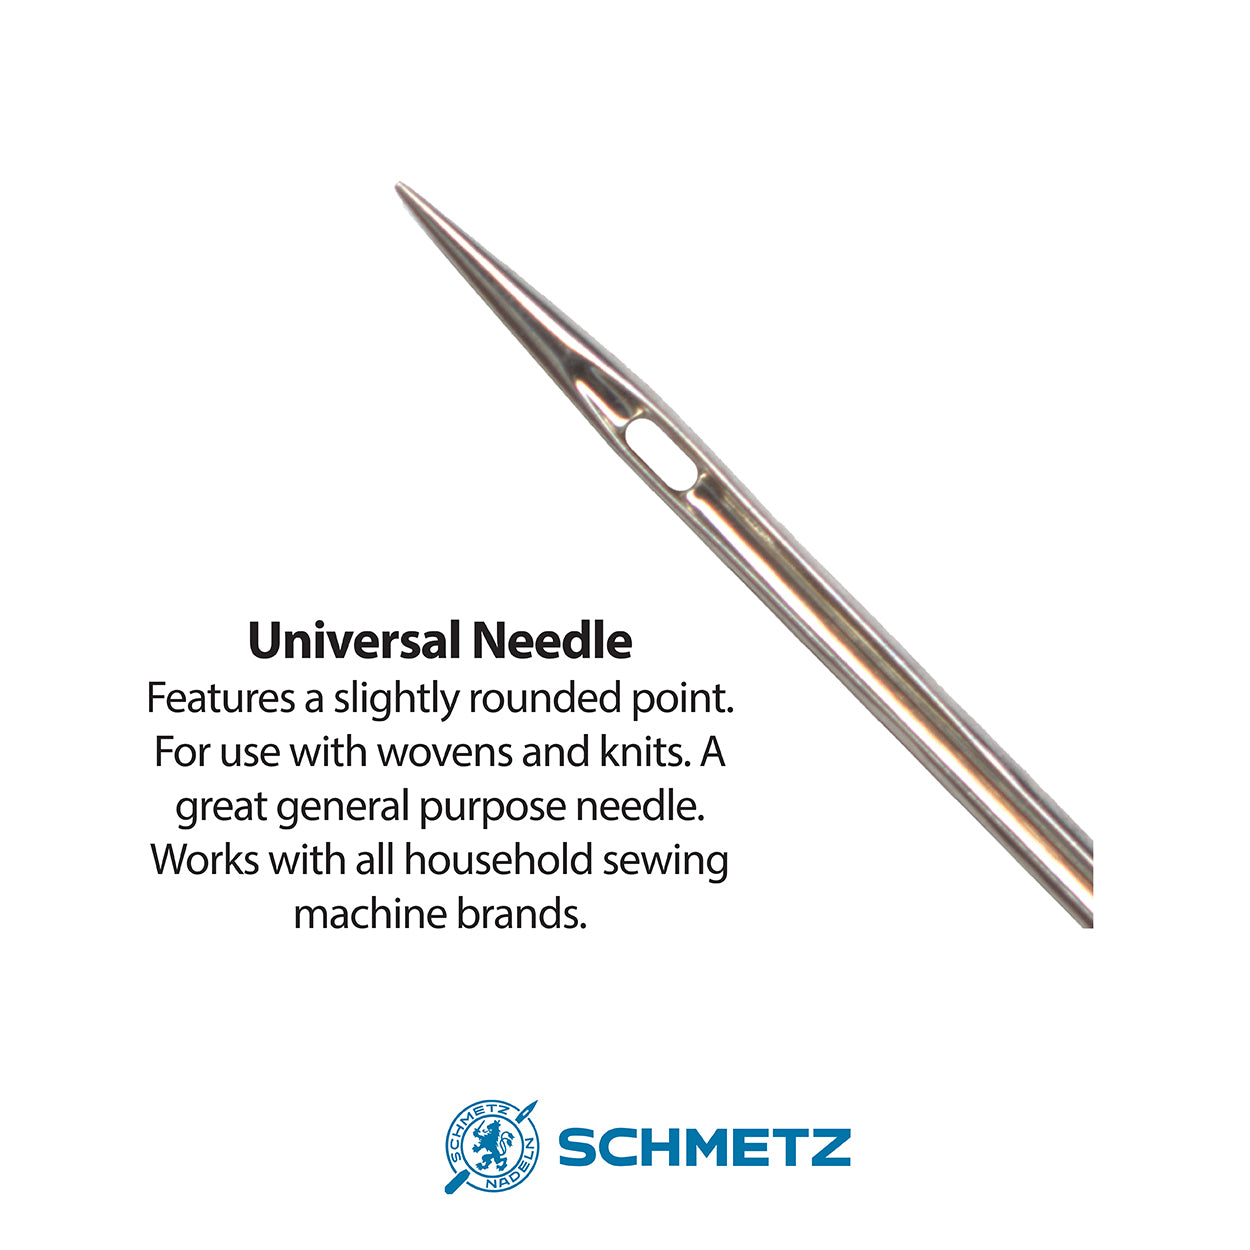 Universal Bulk Needles